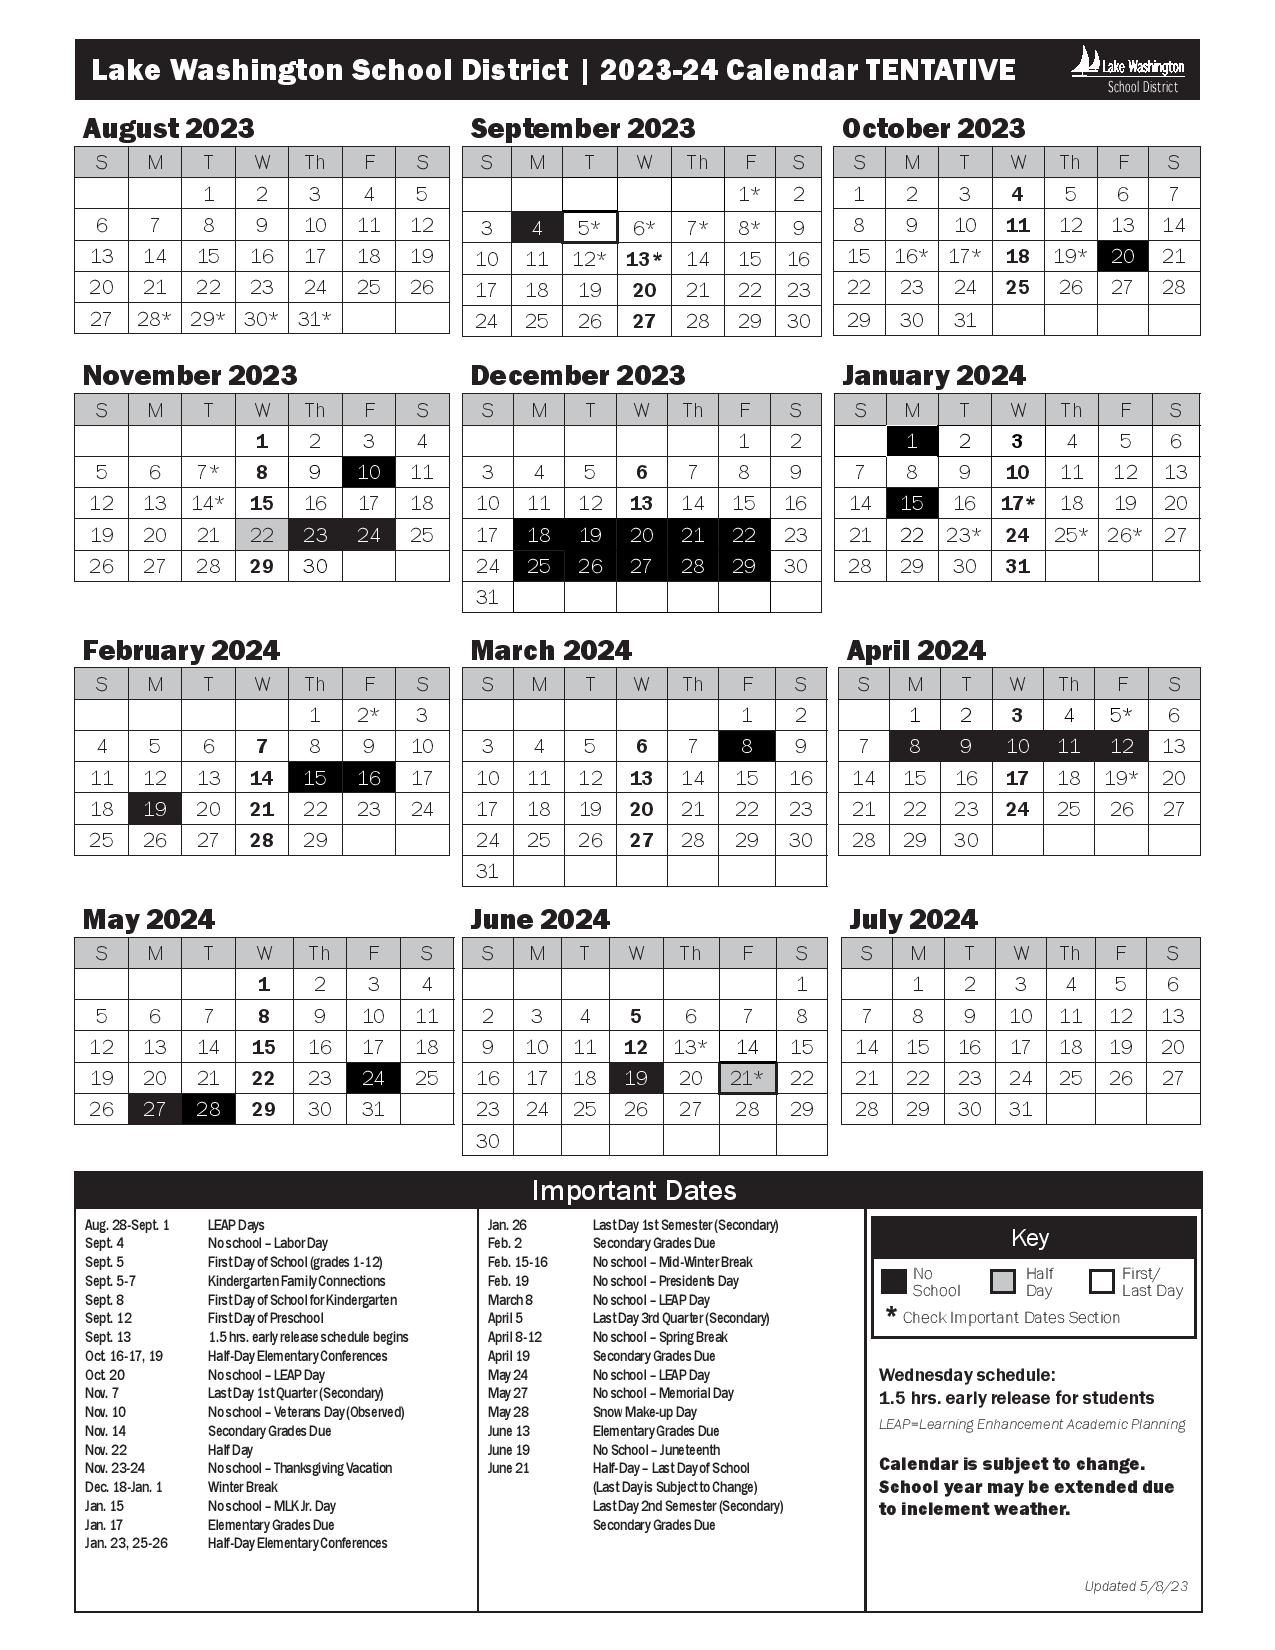 Lake Washington School District Calendar 20232024 in PDF